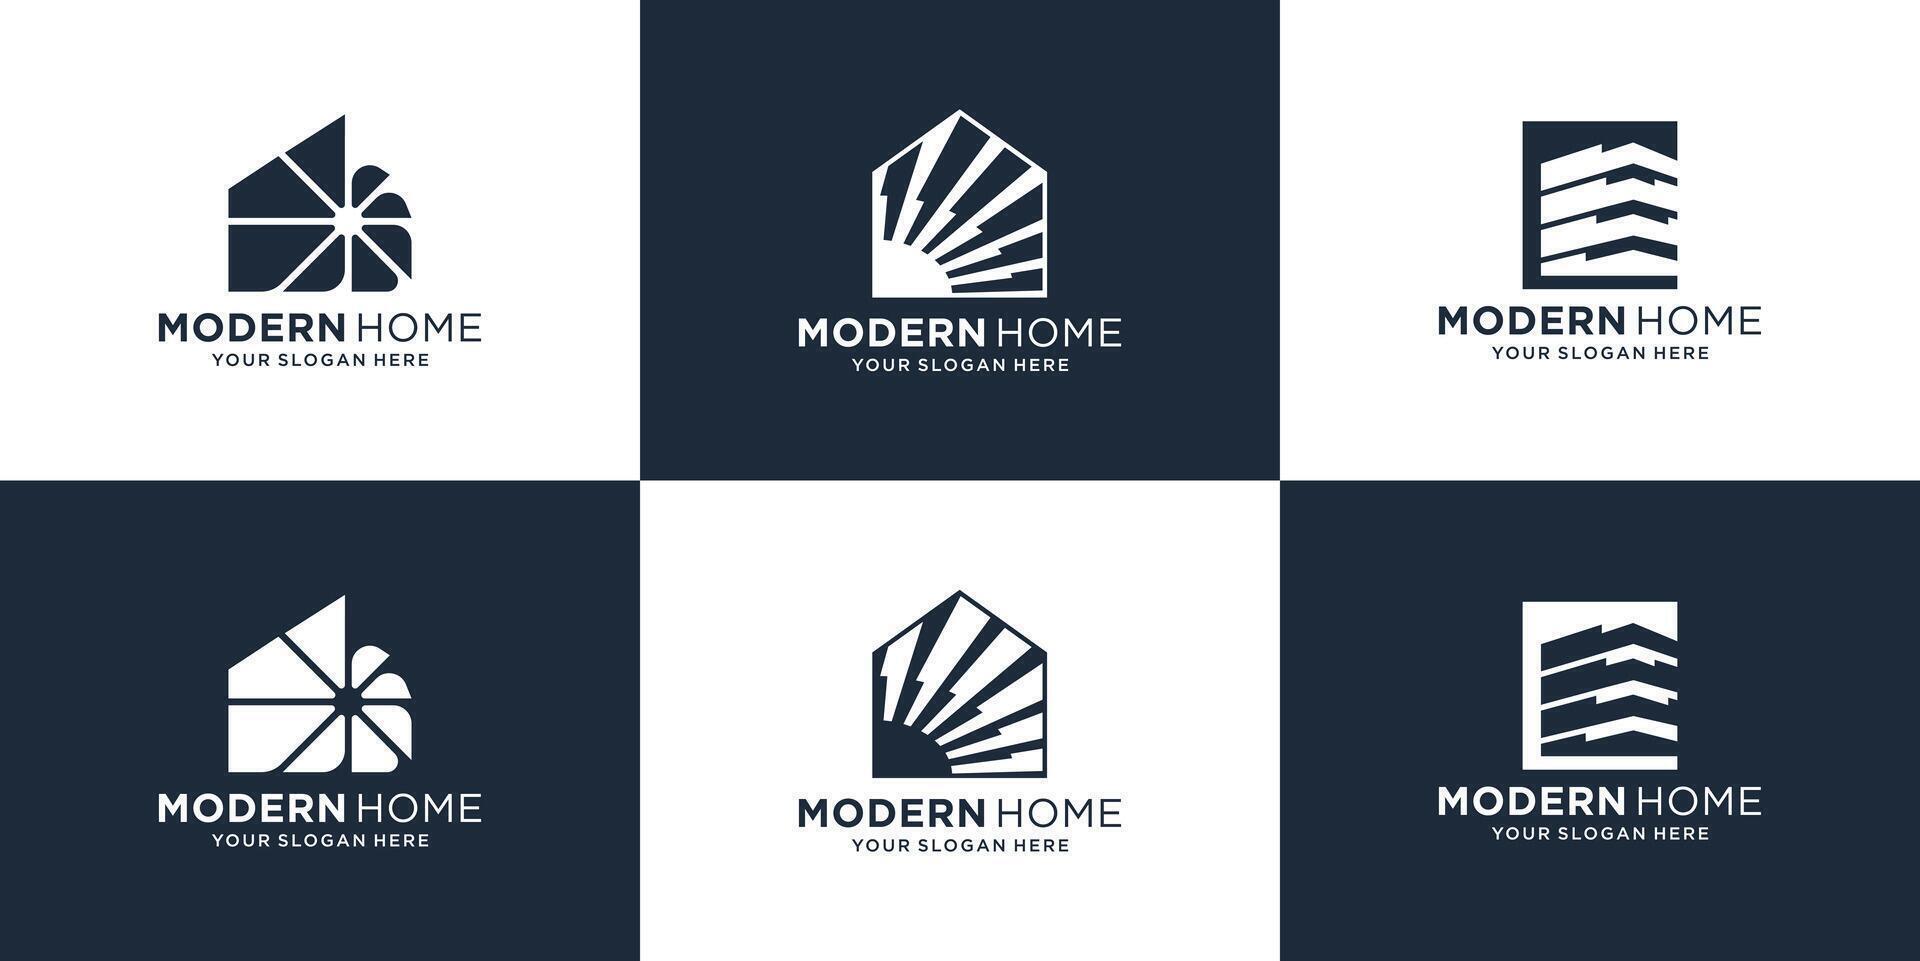 logo modelo real inmuebles inspiración. limpiar concepto, moderno hogar logo y elegante estilo diseño. vector